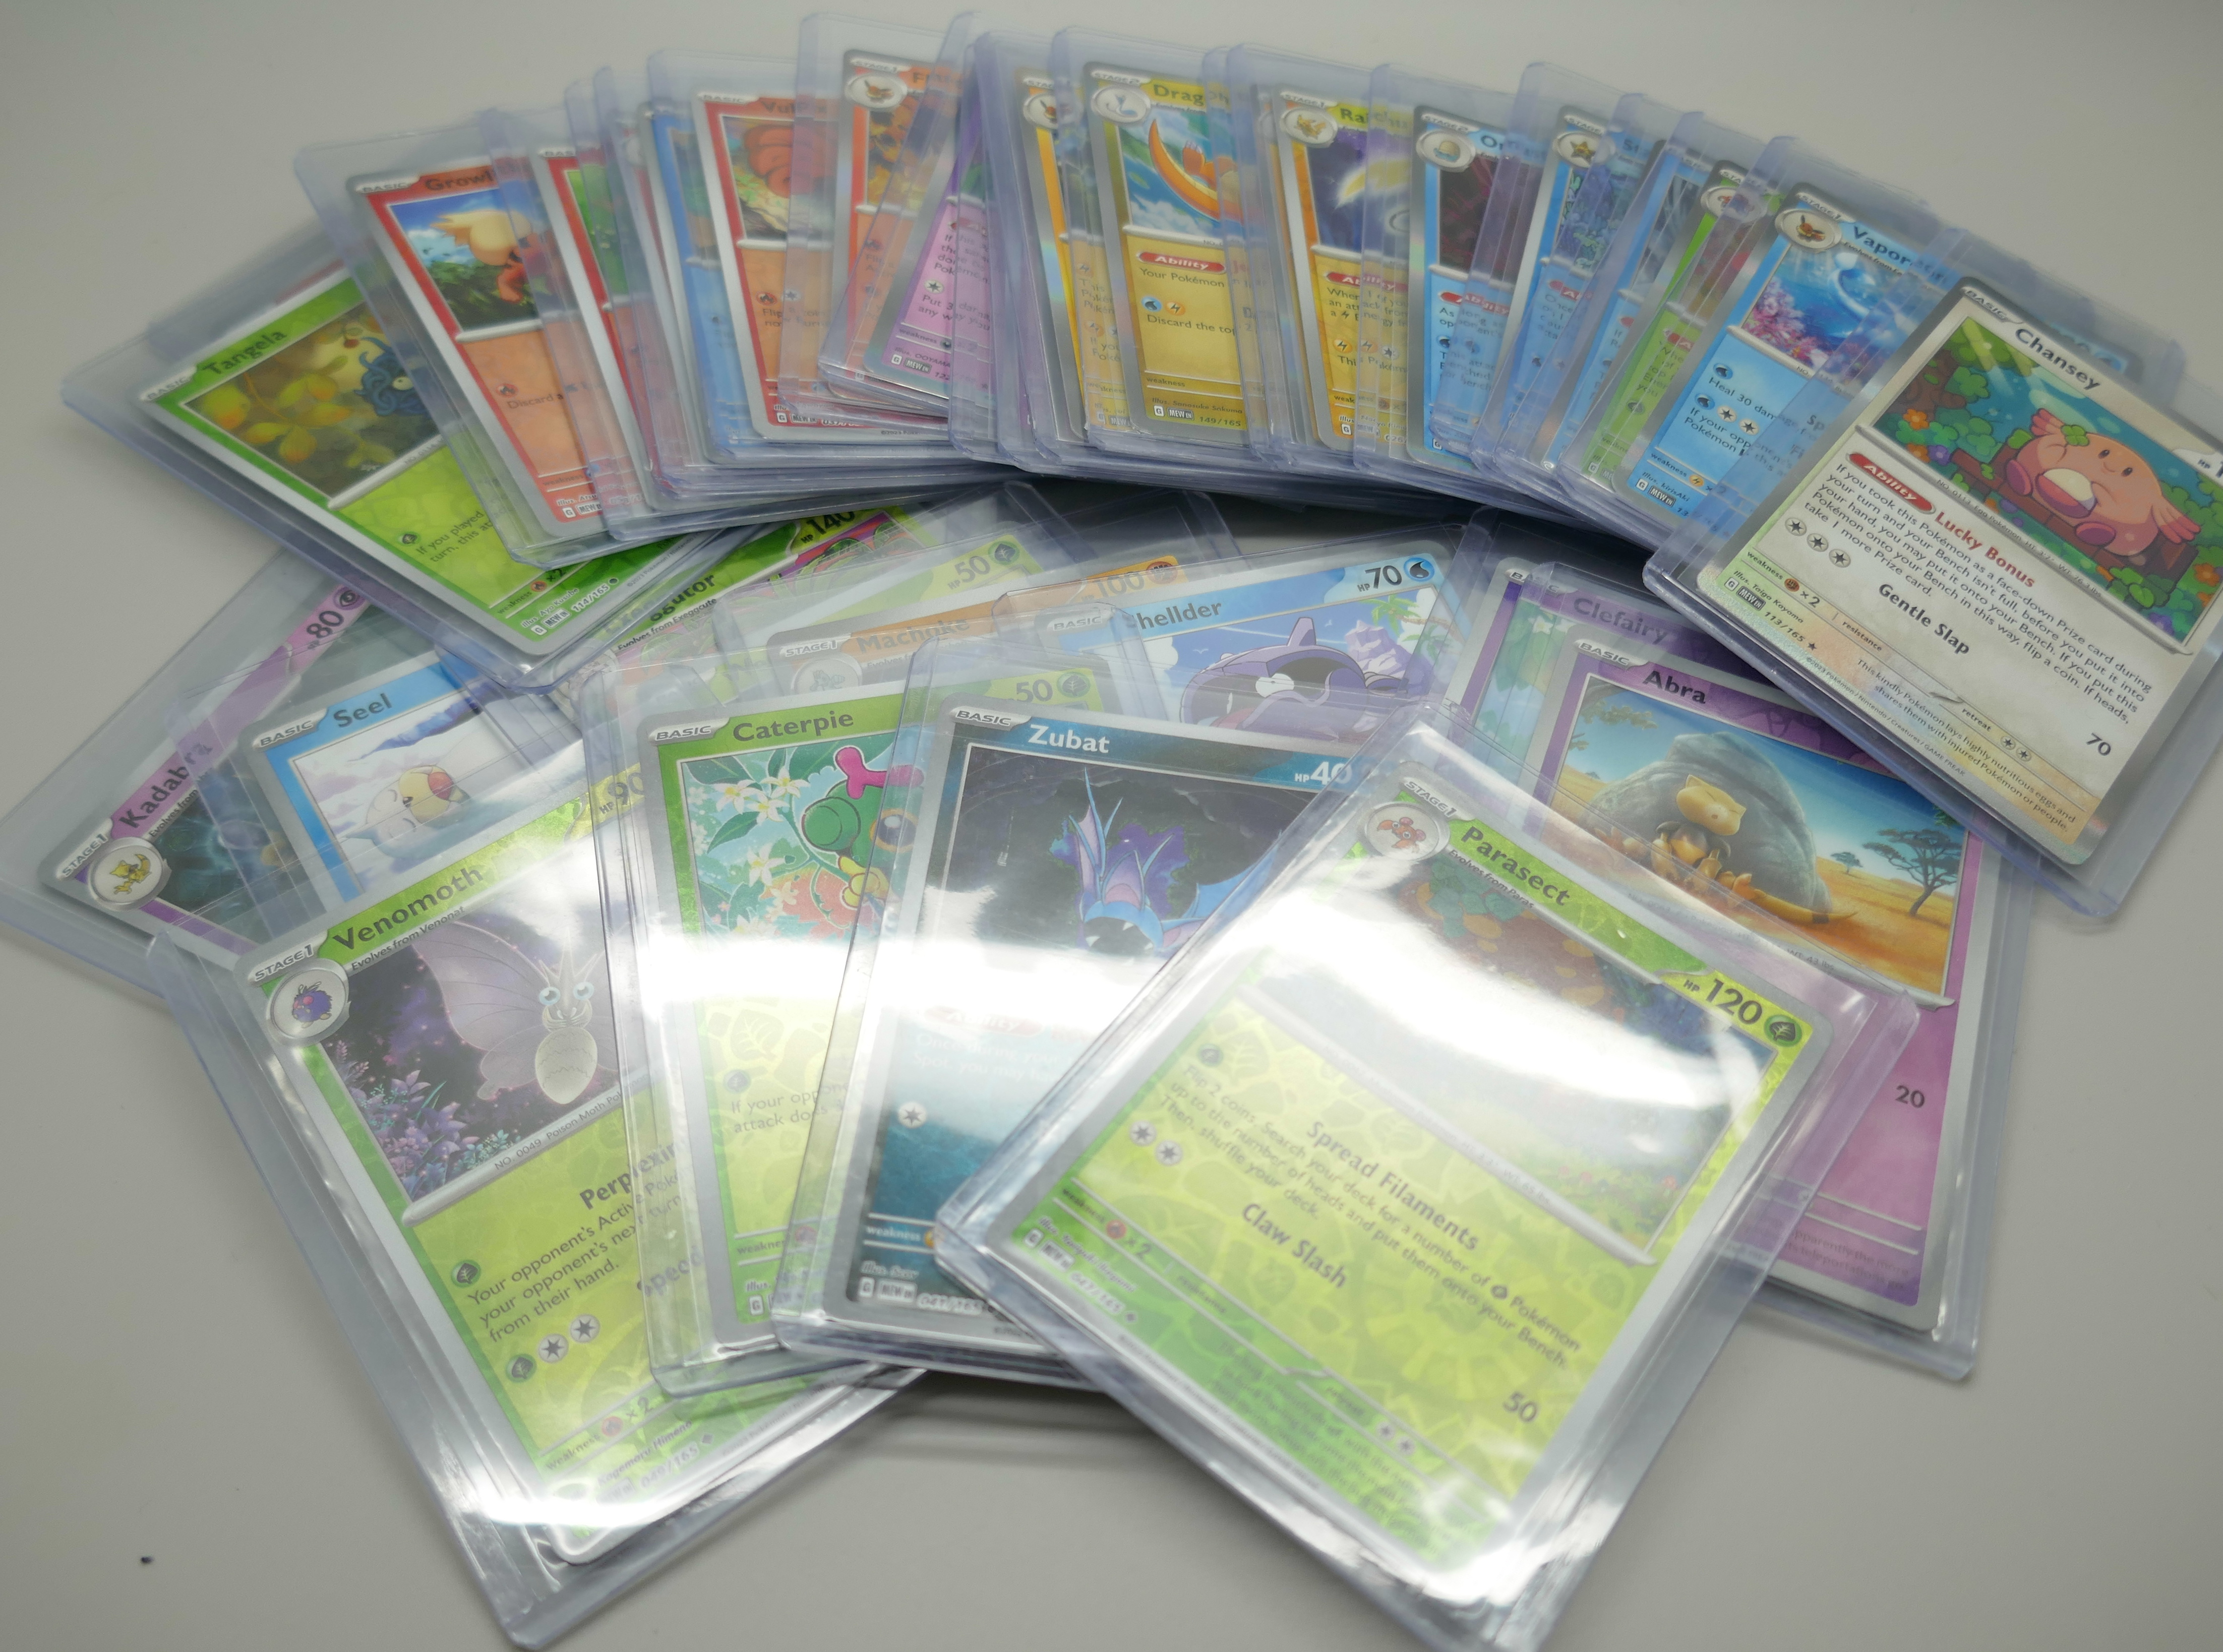 34 x 151 Scarlet & Violet Holographic Pokemon cards , including 15 x Black star rares, 19 common,